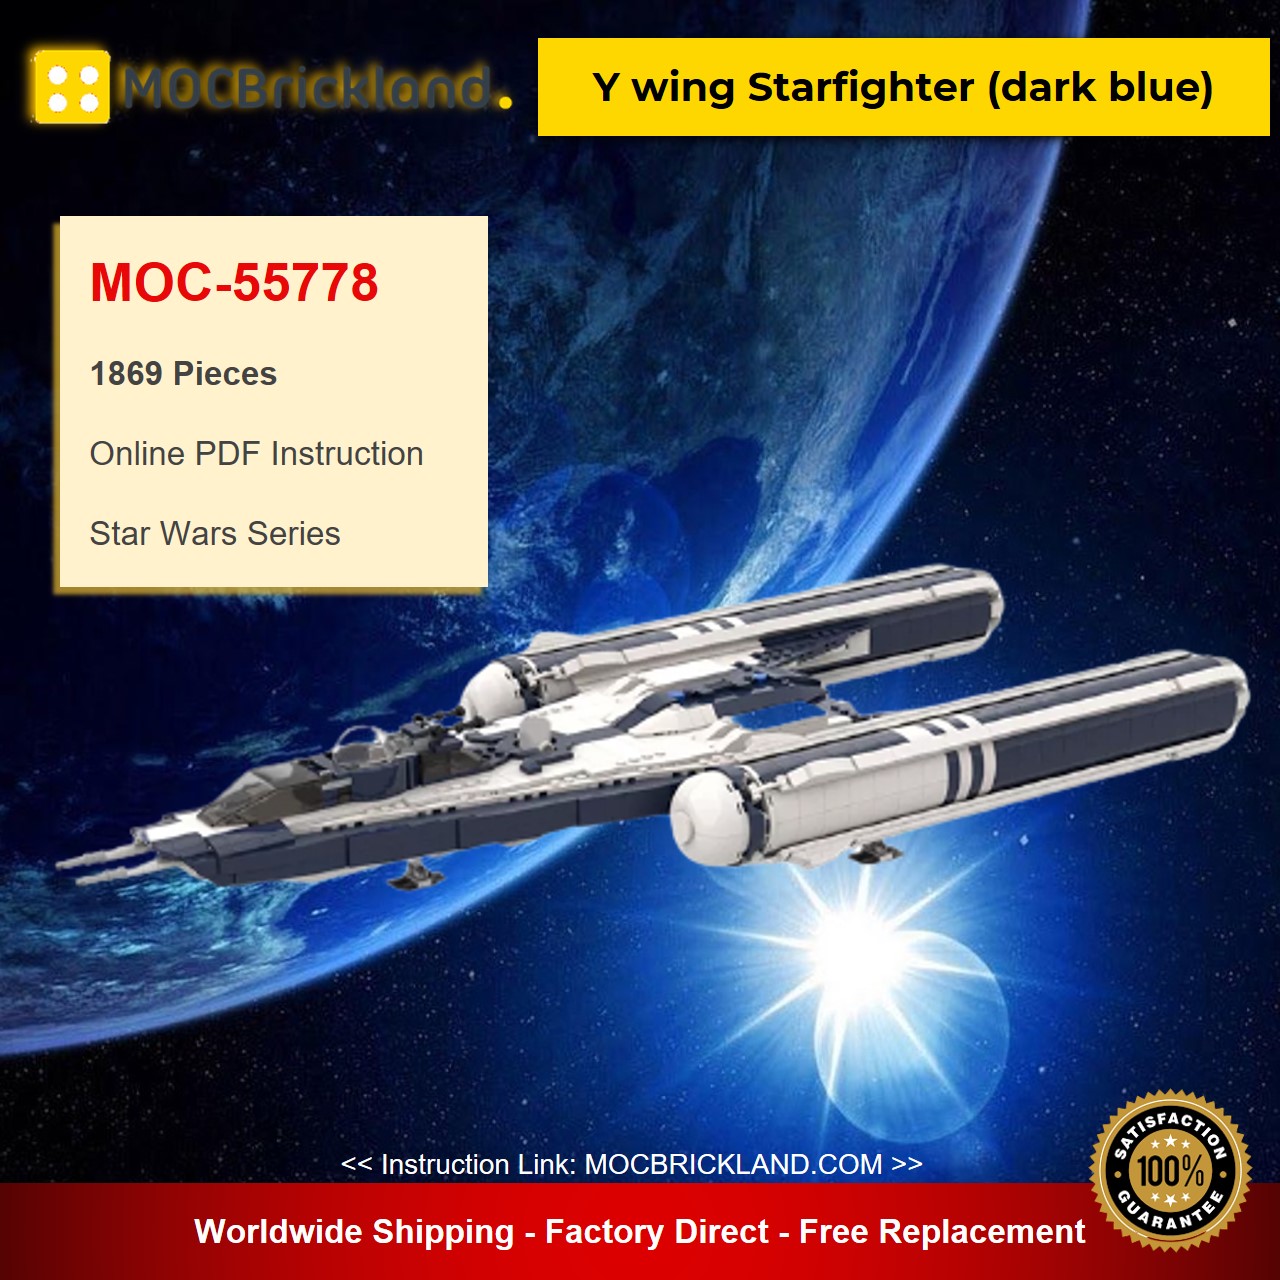 MOC-55778 Star Wars Y wing Starfighter (dark blue) Designed By starwarsfan66 With 1869 Pieces